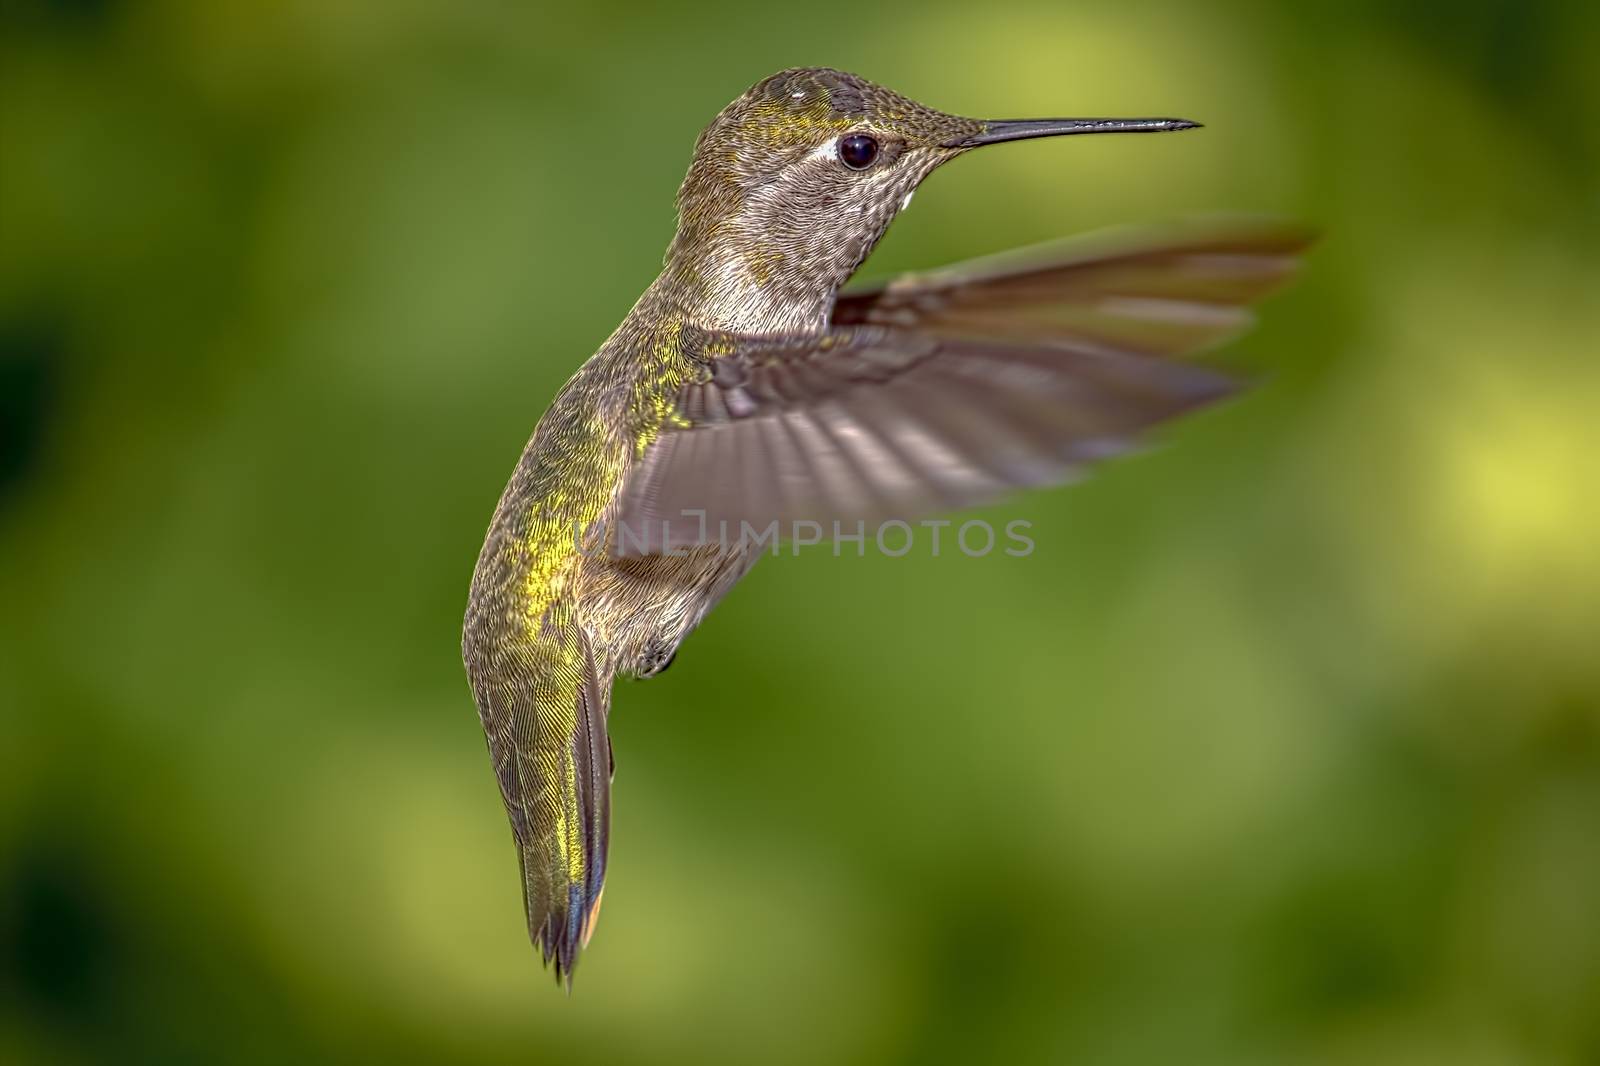 Hummingbird in Flight by backyard_photography